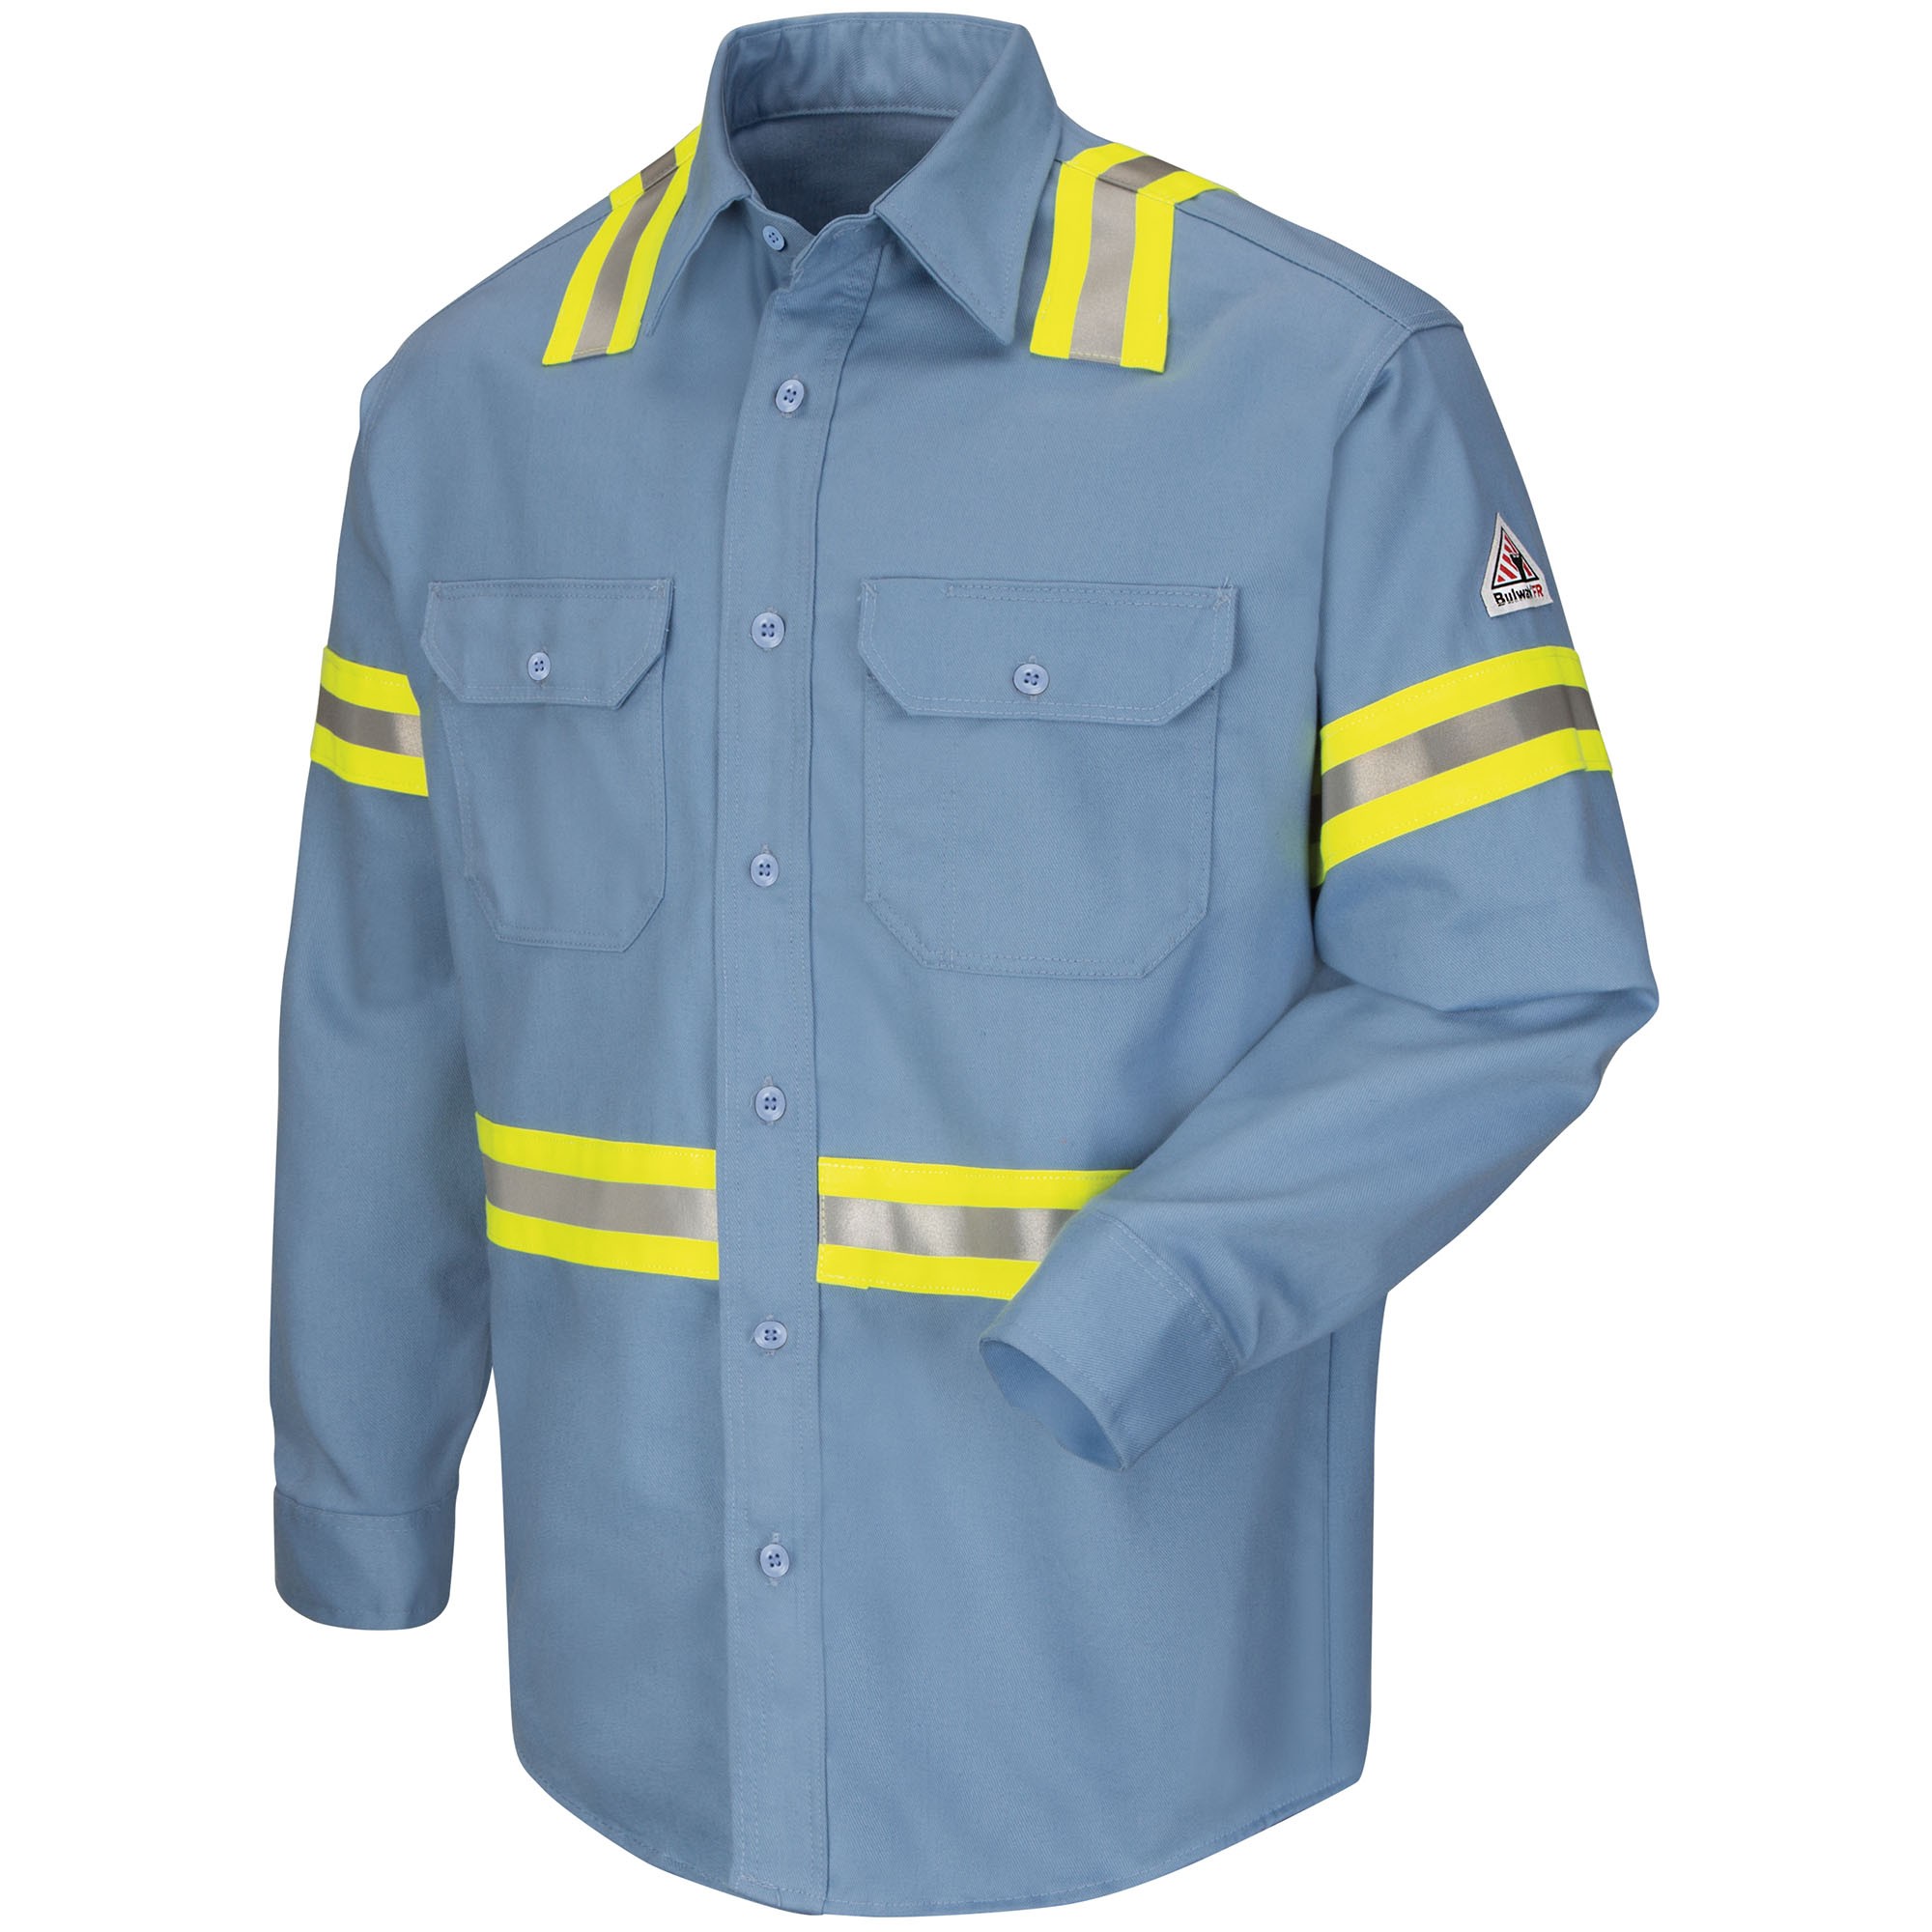 Bulwark FR EXCEL FR Comfortouch Enhanced Vis Uniform Shirt Light Blue Large-Long 